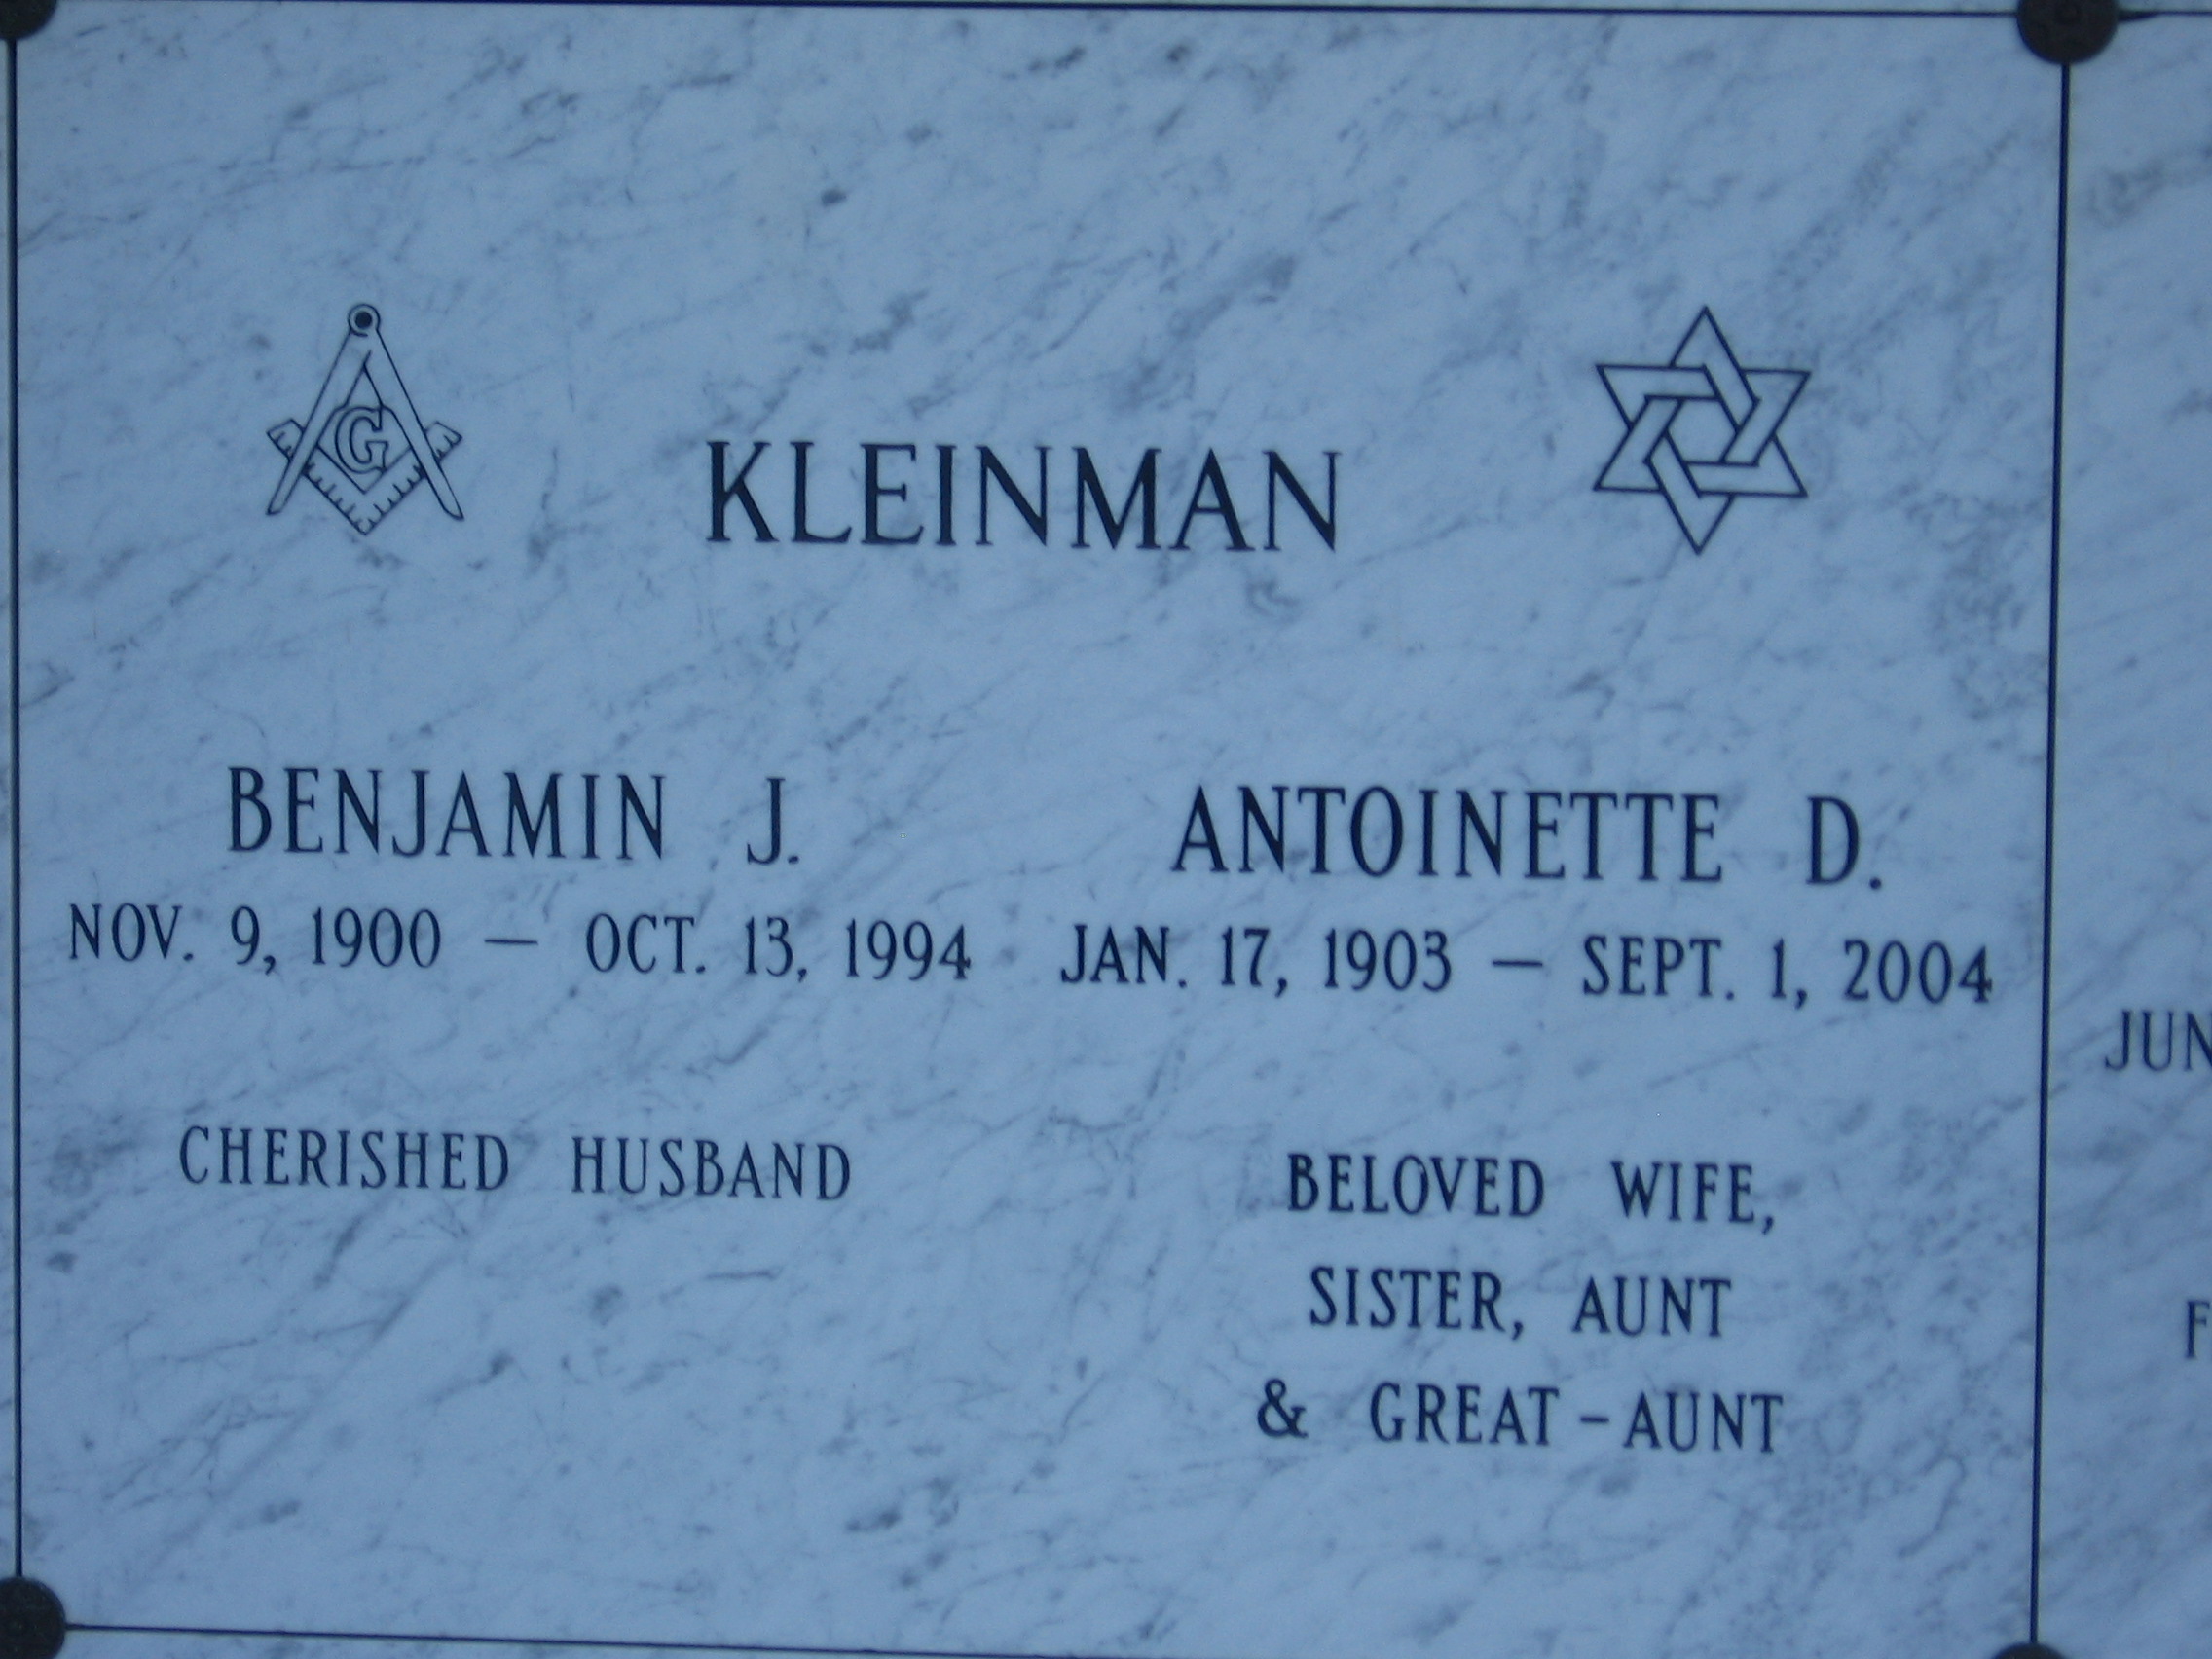 Benjamin Kleinman